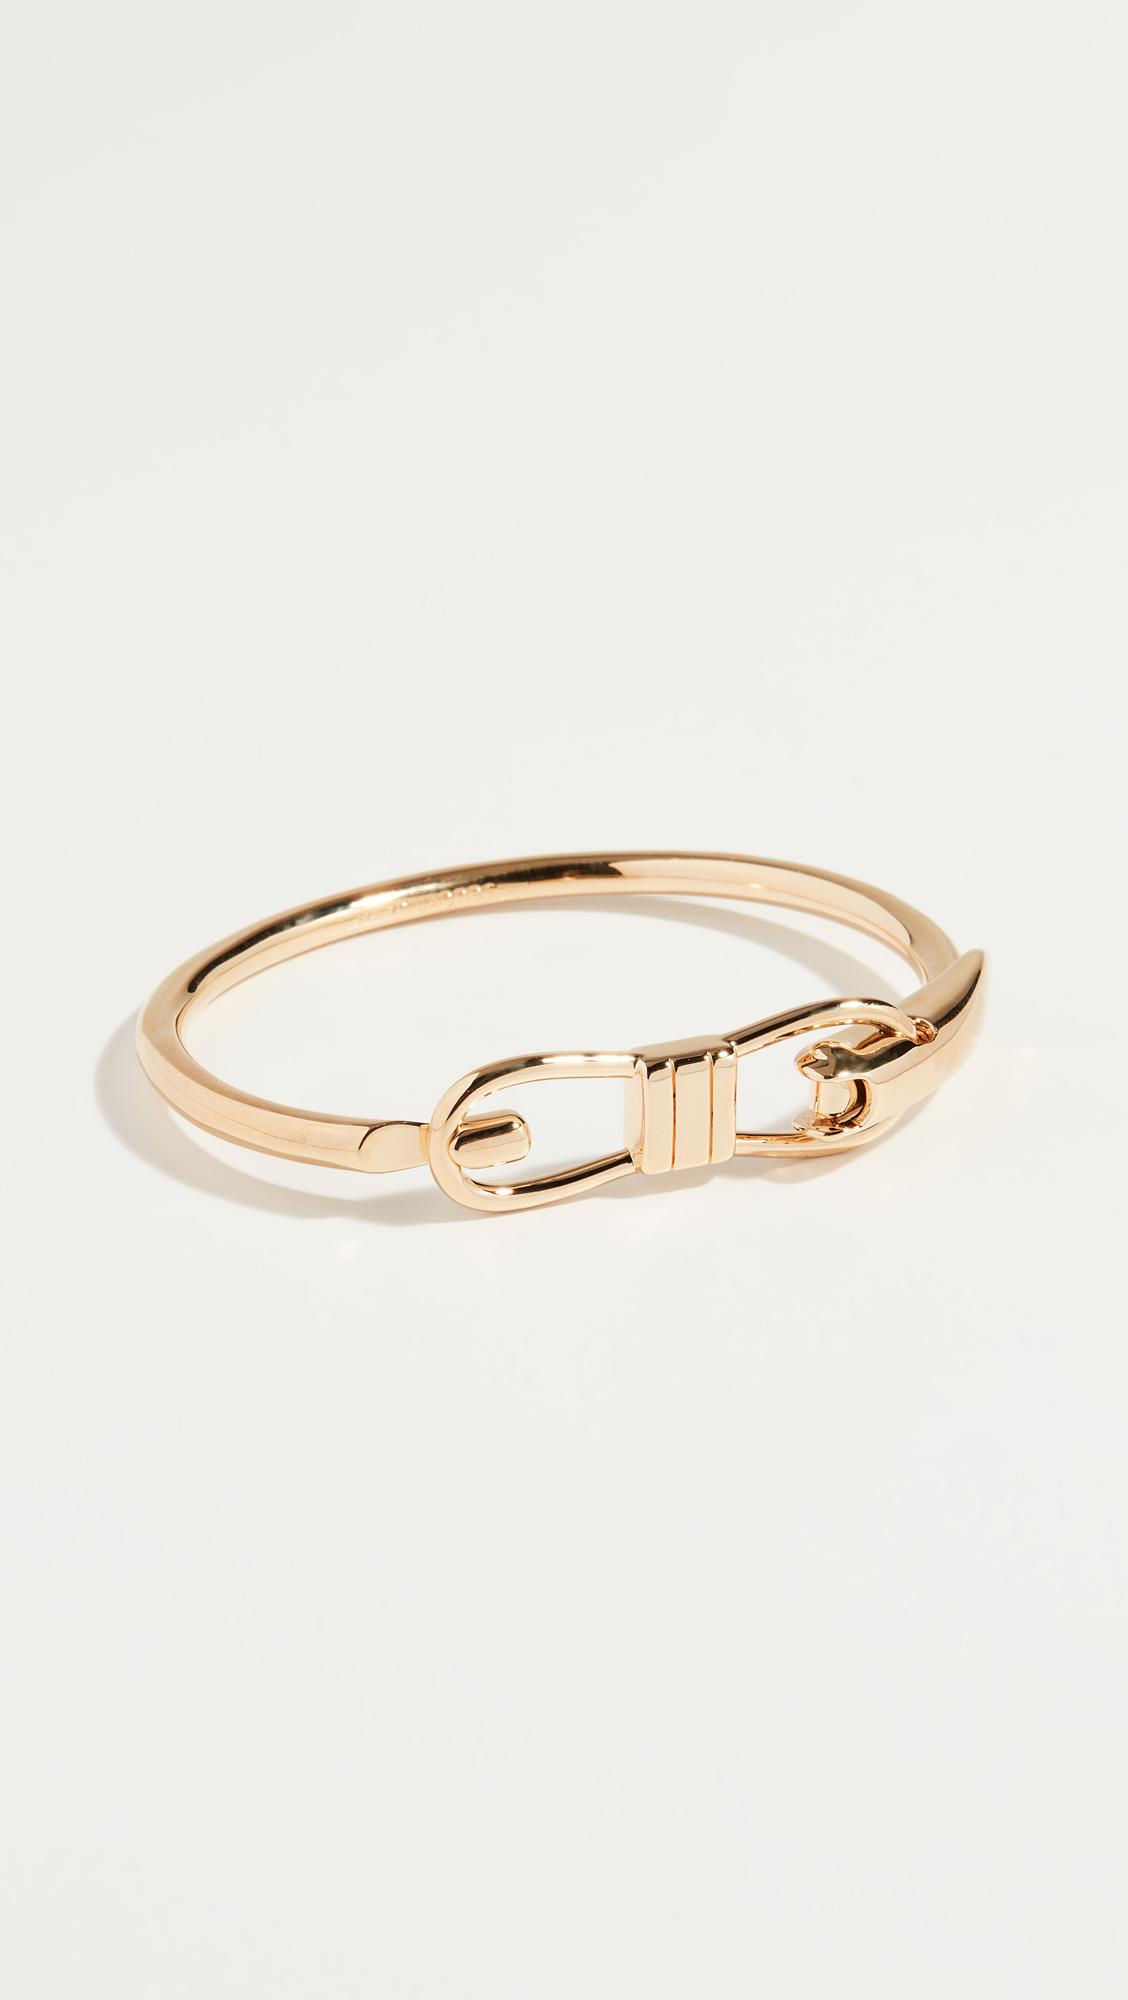 Lyst - Marc Jacobs Key Ring Hinge Cuff Bracelet in Metallic